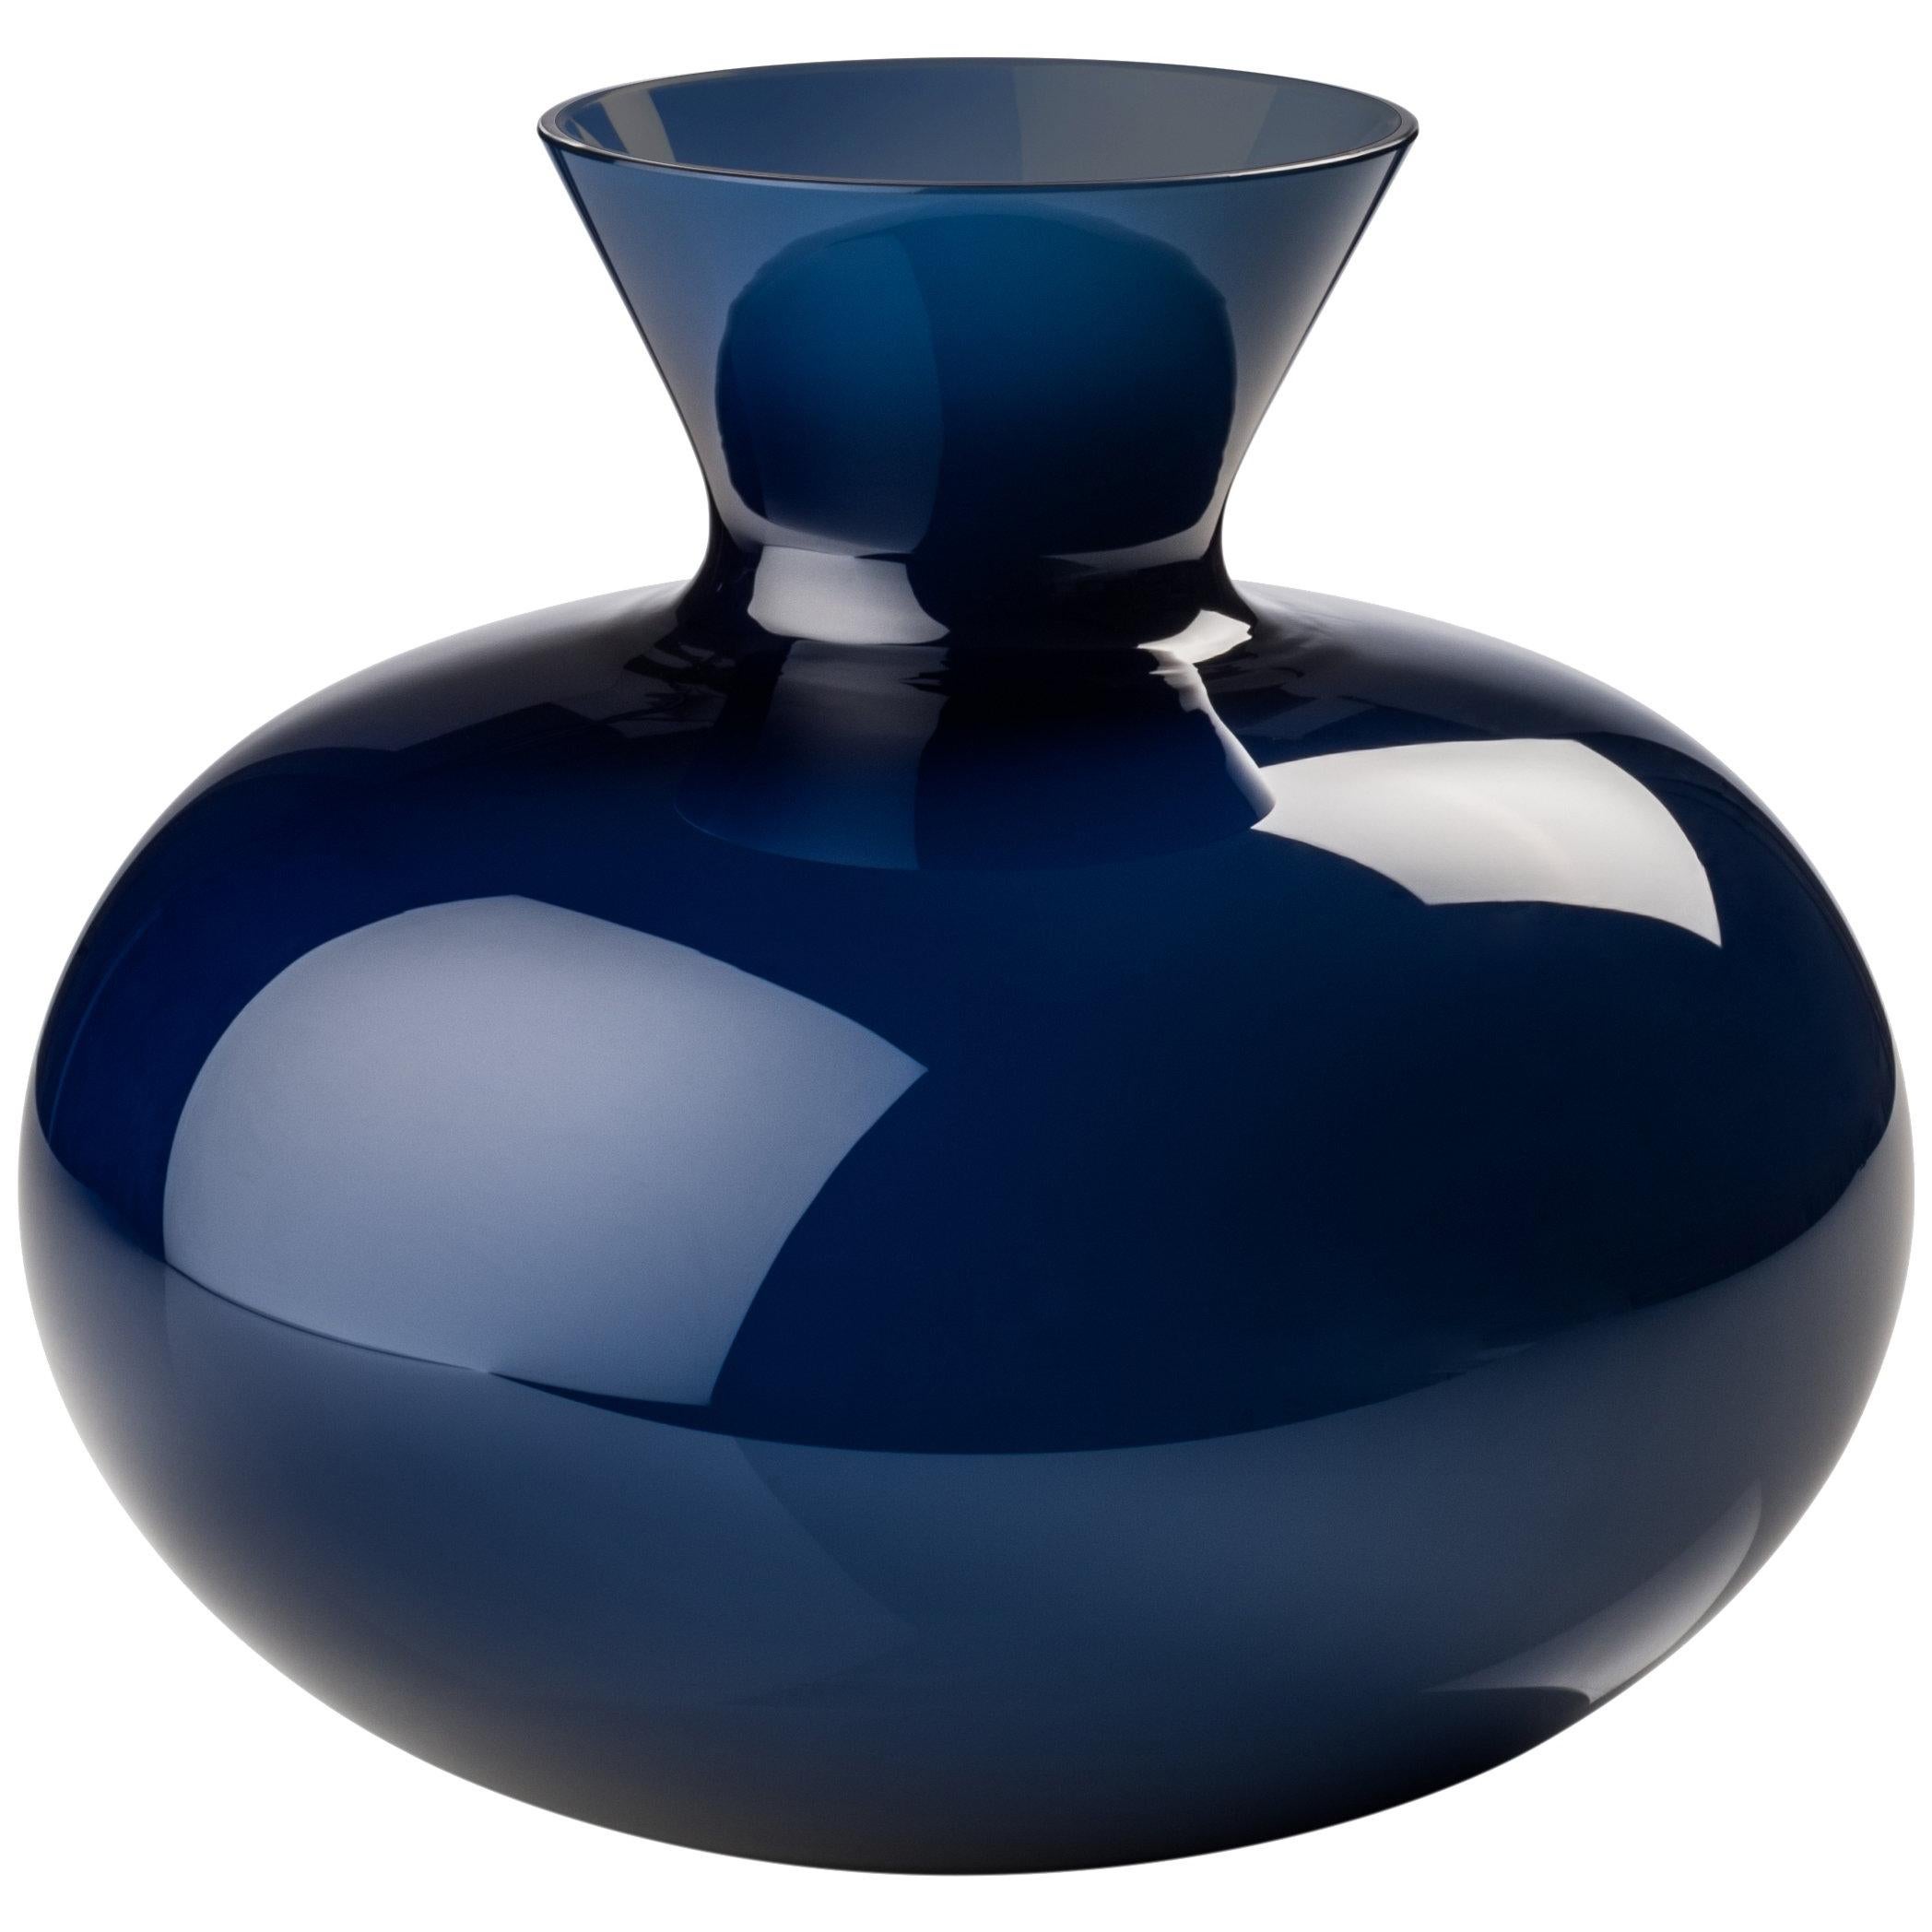 Idria Small Round Glass Vase in Blue Marine by Venini